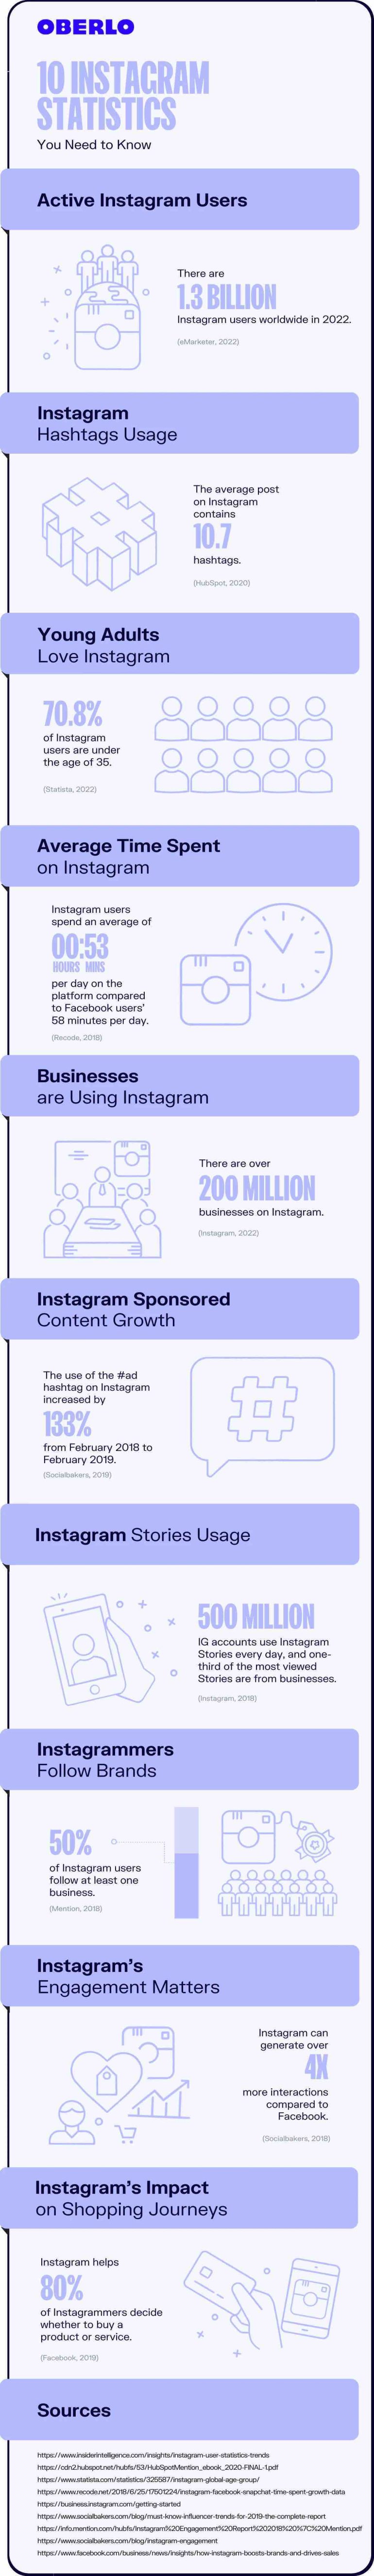 Instagram Infographic